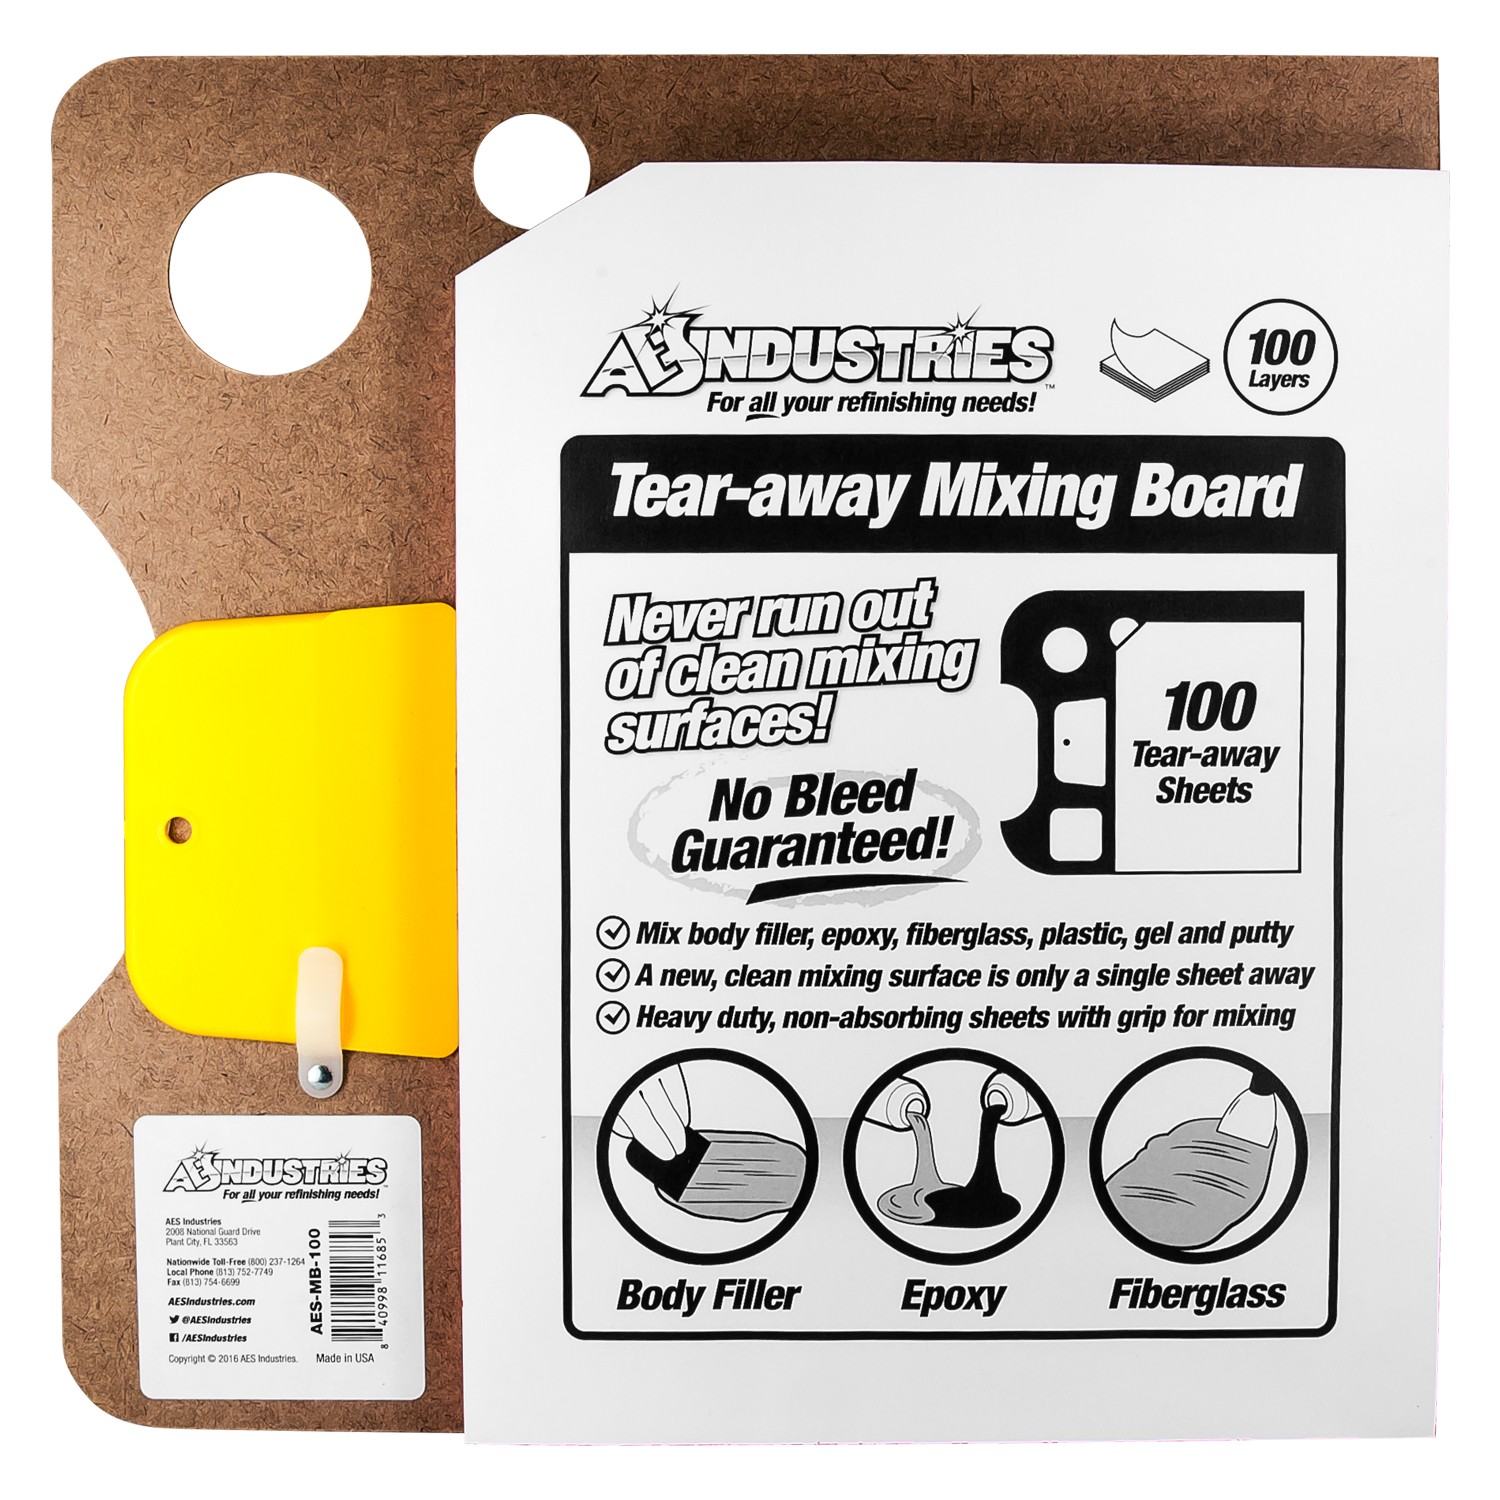 Tear-away Mixing Board (100 Sheets)